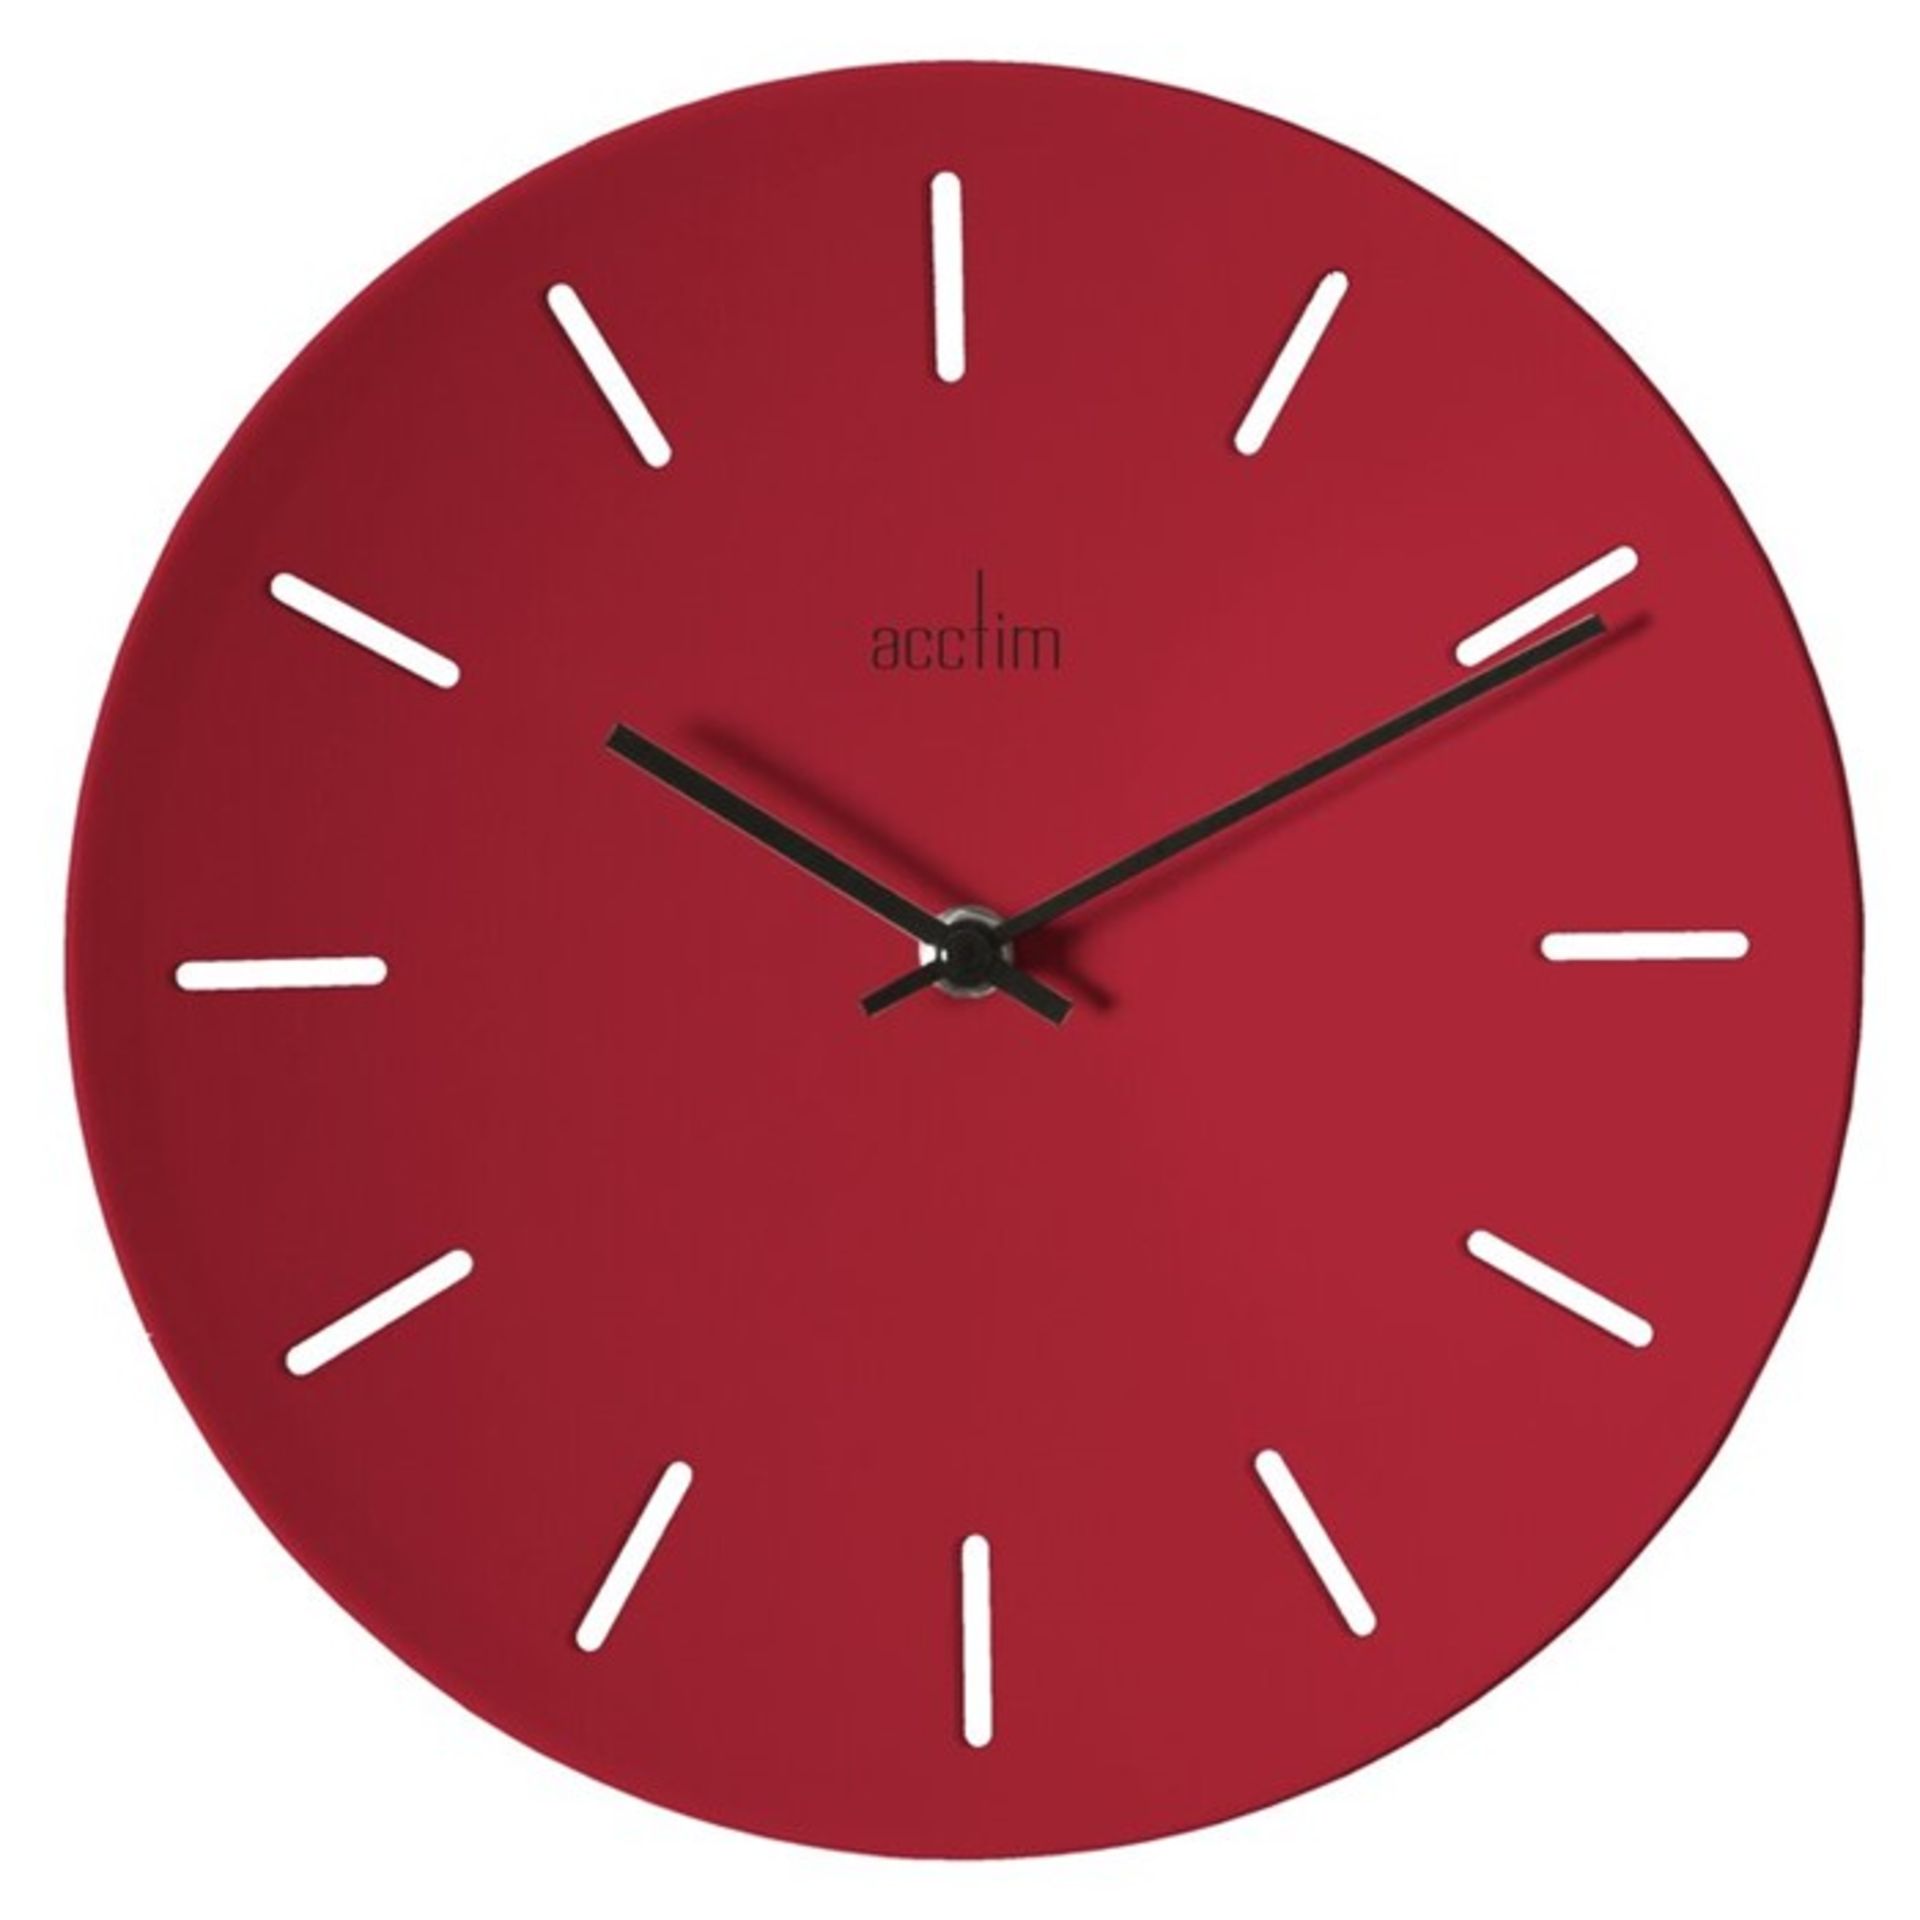 Acctim, Majken 15.4cm Wall Clock (RED) - RRP £25.99 (AKTM1140.59247361 - HL9 - 8/28) 4B